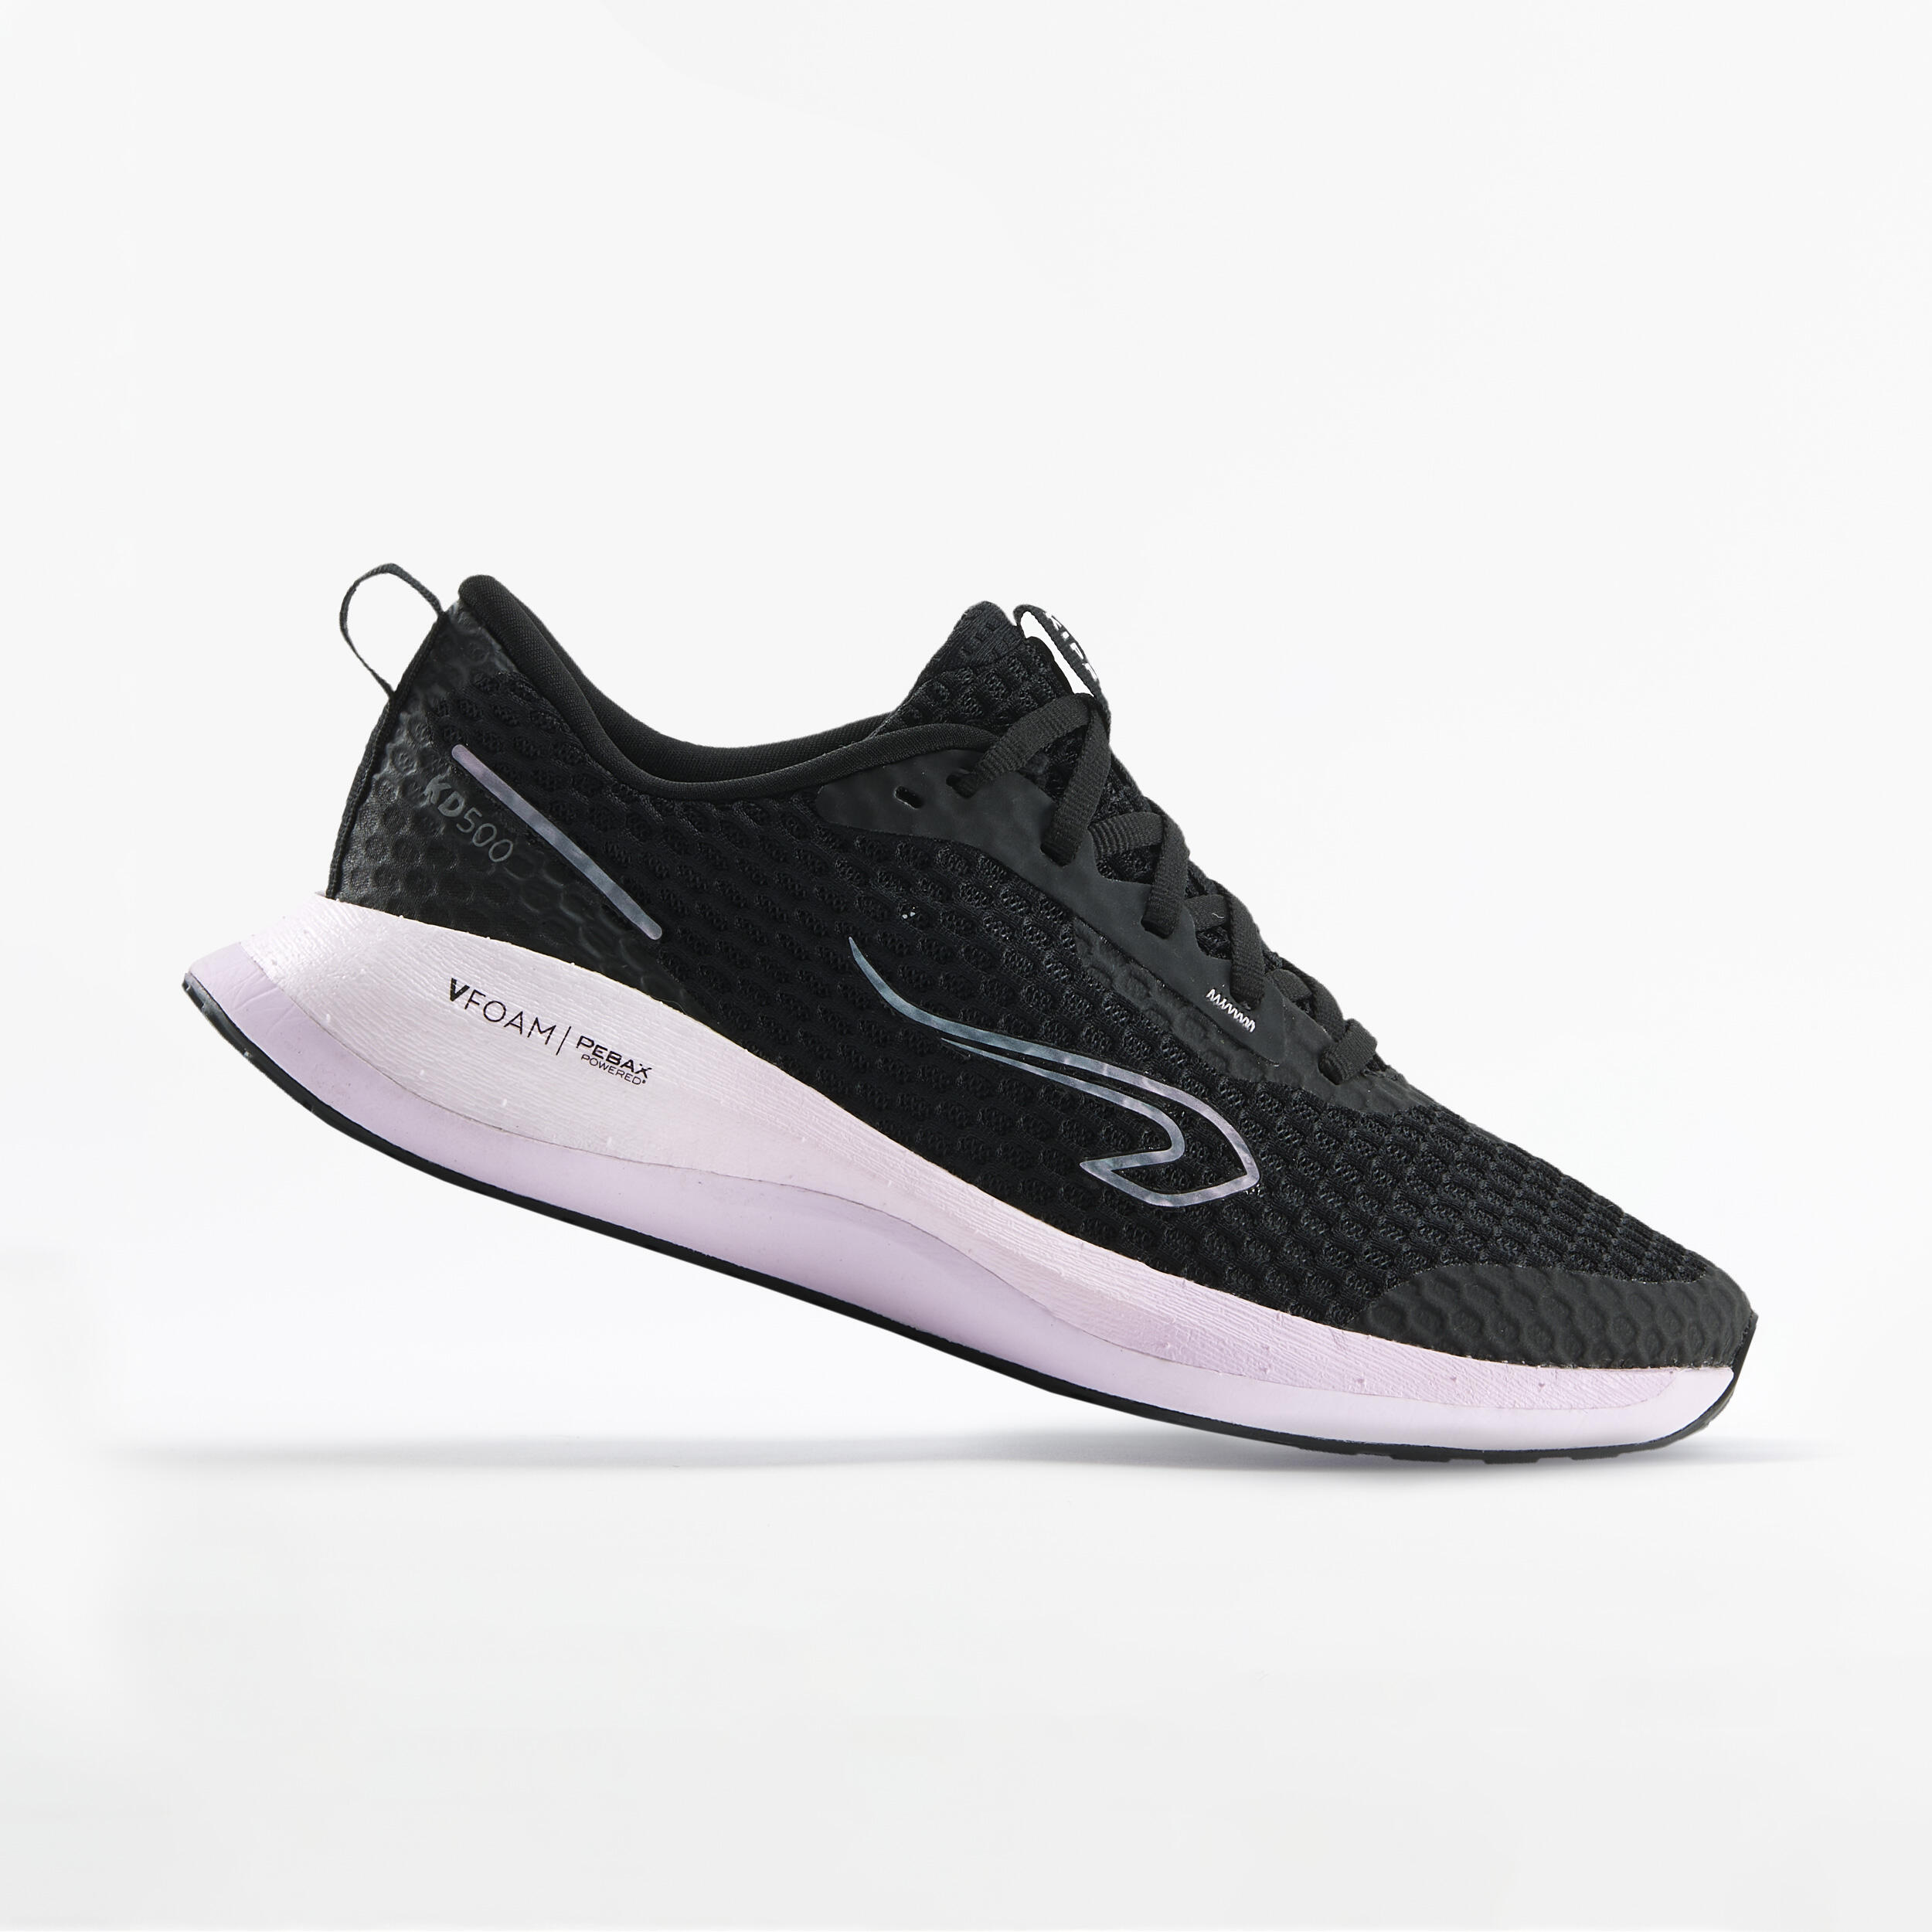 KD500 2 women's running shoes - black/mauve 1/8